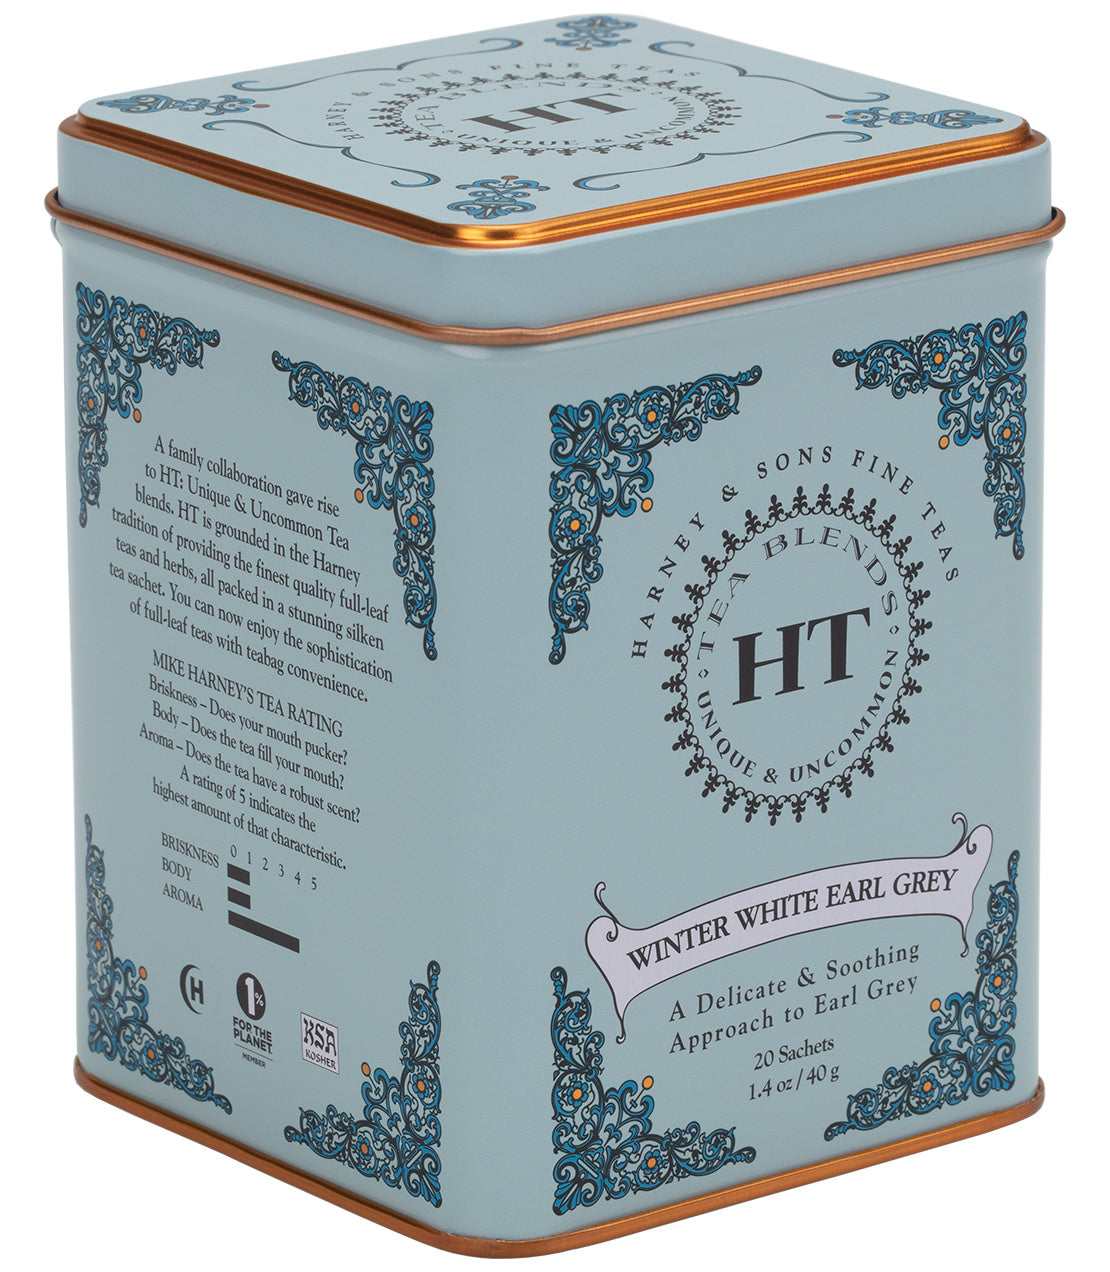 Winter White Earl Grey - Sachets HT Tin of 20 Sachets - Harney & Sons Fine Teas